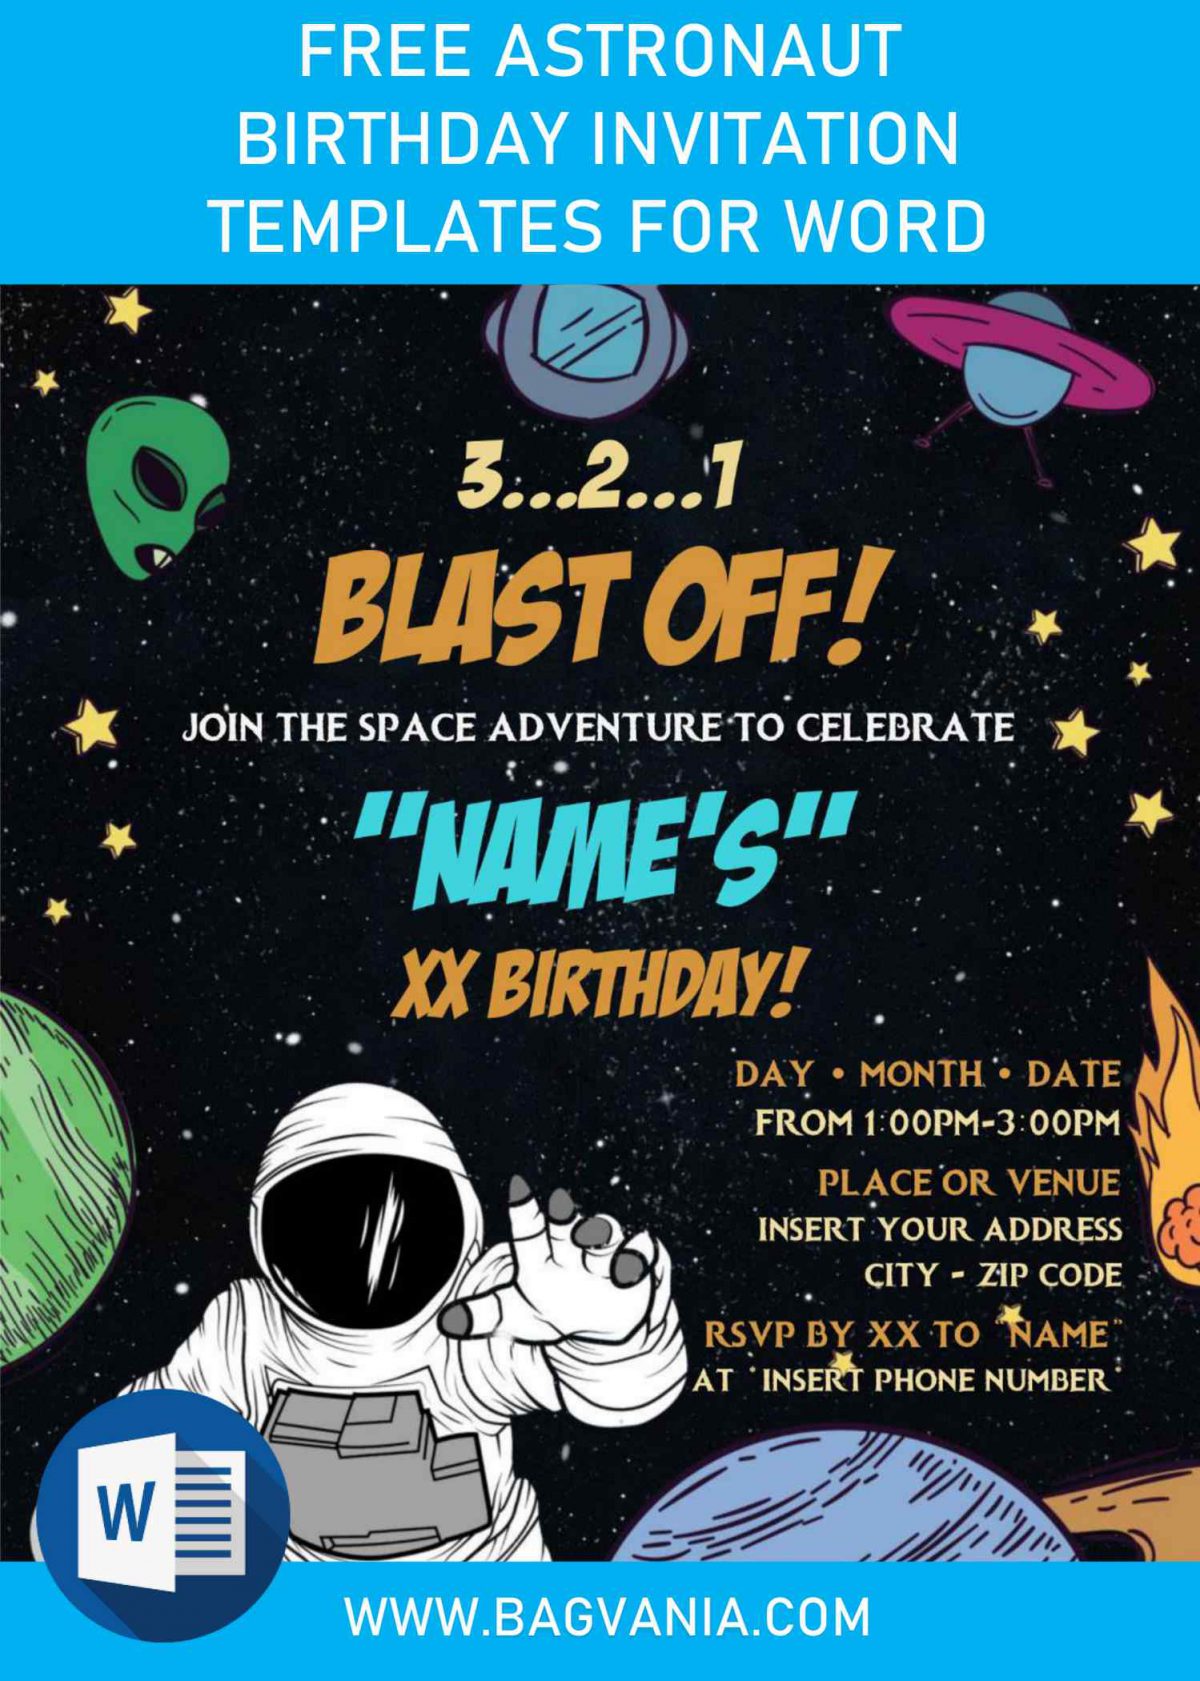 Free Astronaut Birthday Invitation Templates For Word